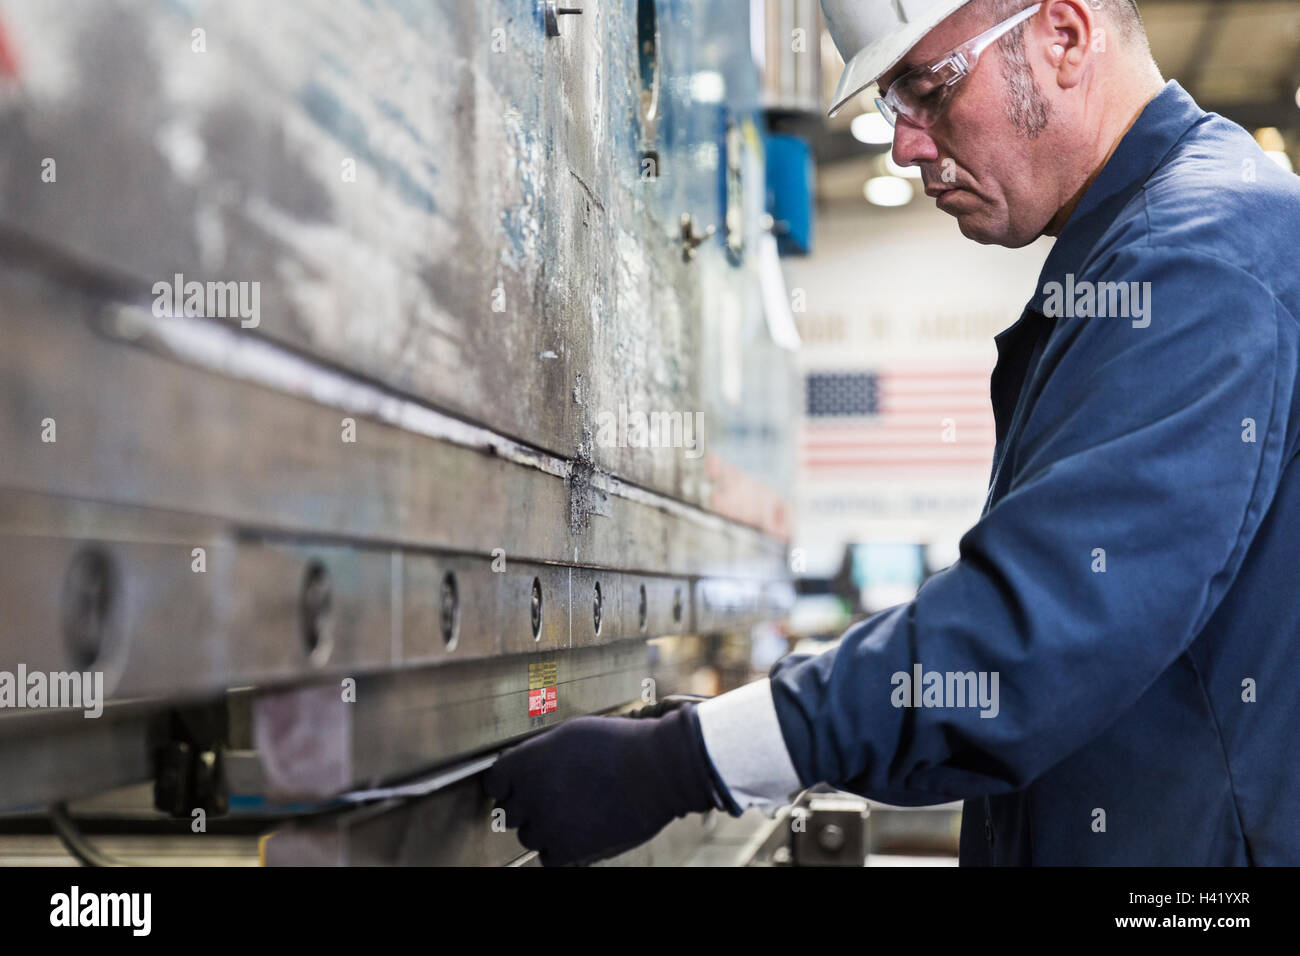 Hispanic worker fabricating metal in factory Stock Photo